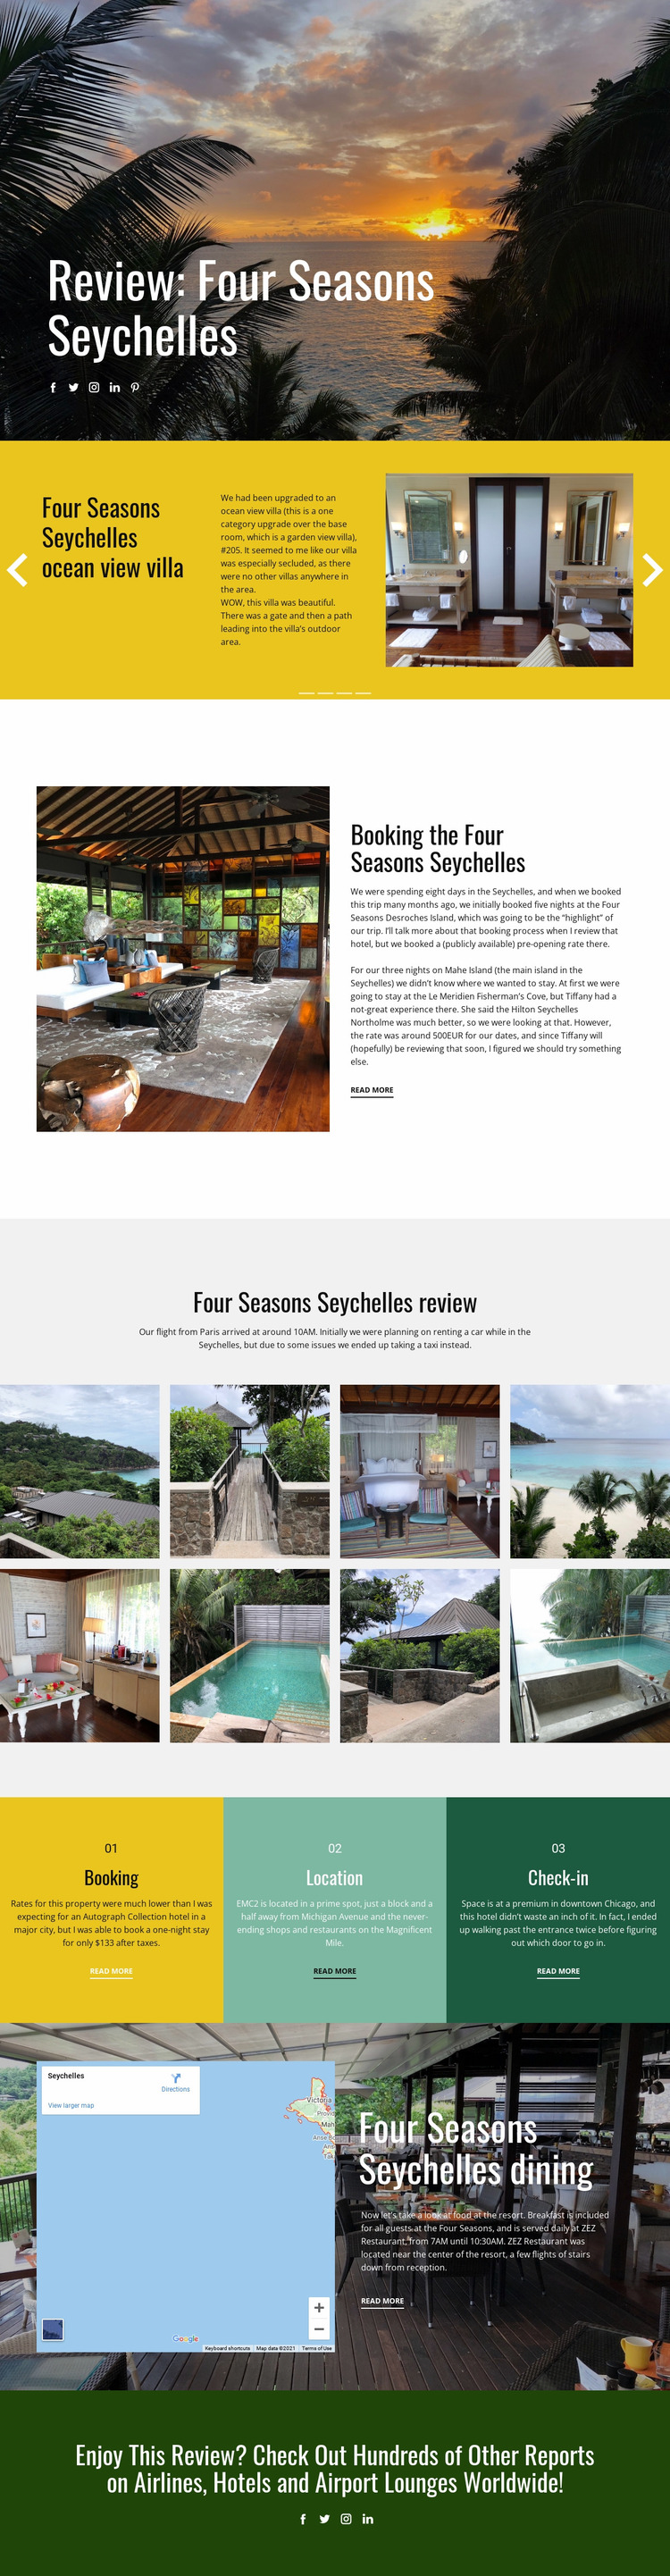 Four Seasons Website Mockup